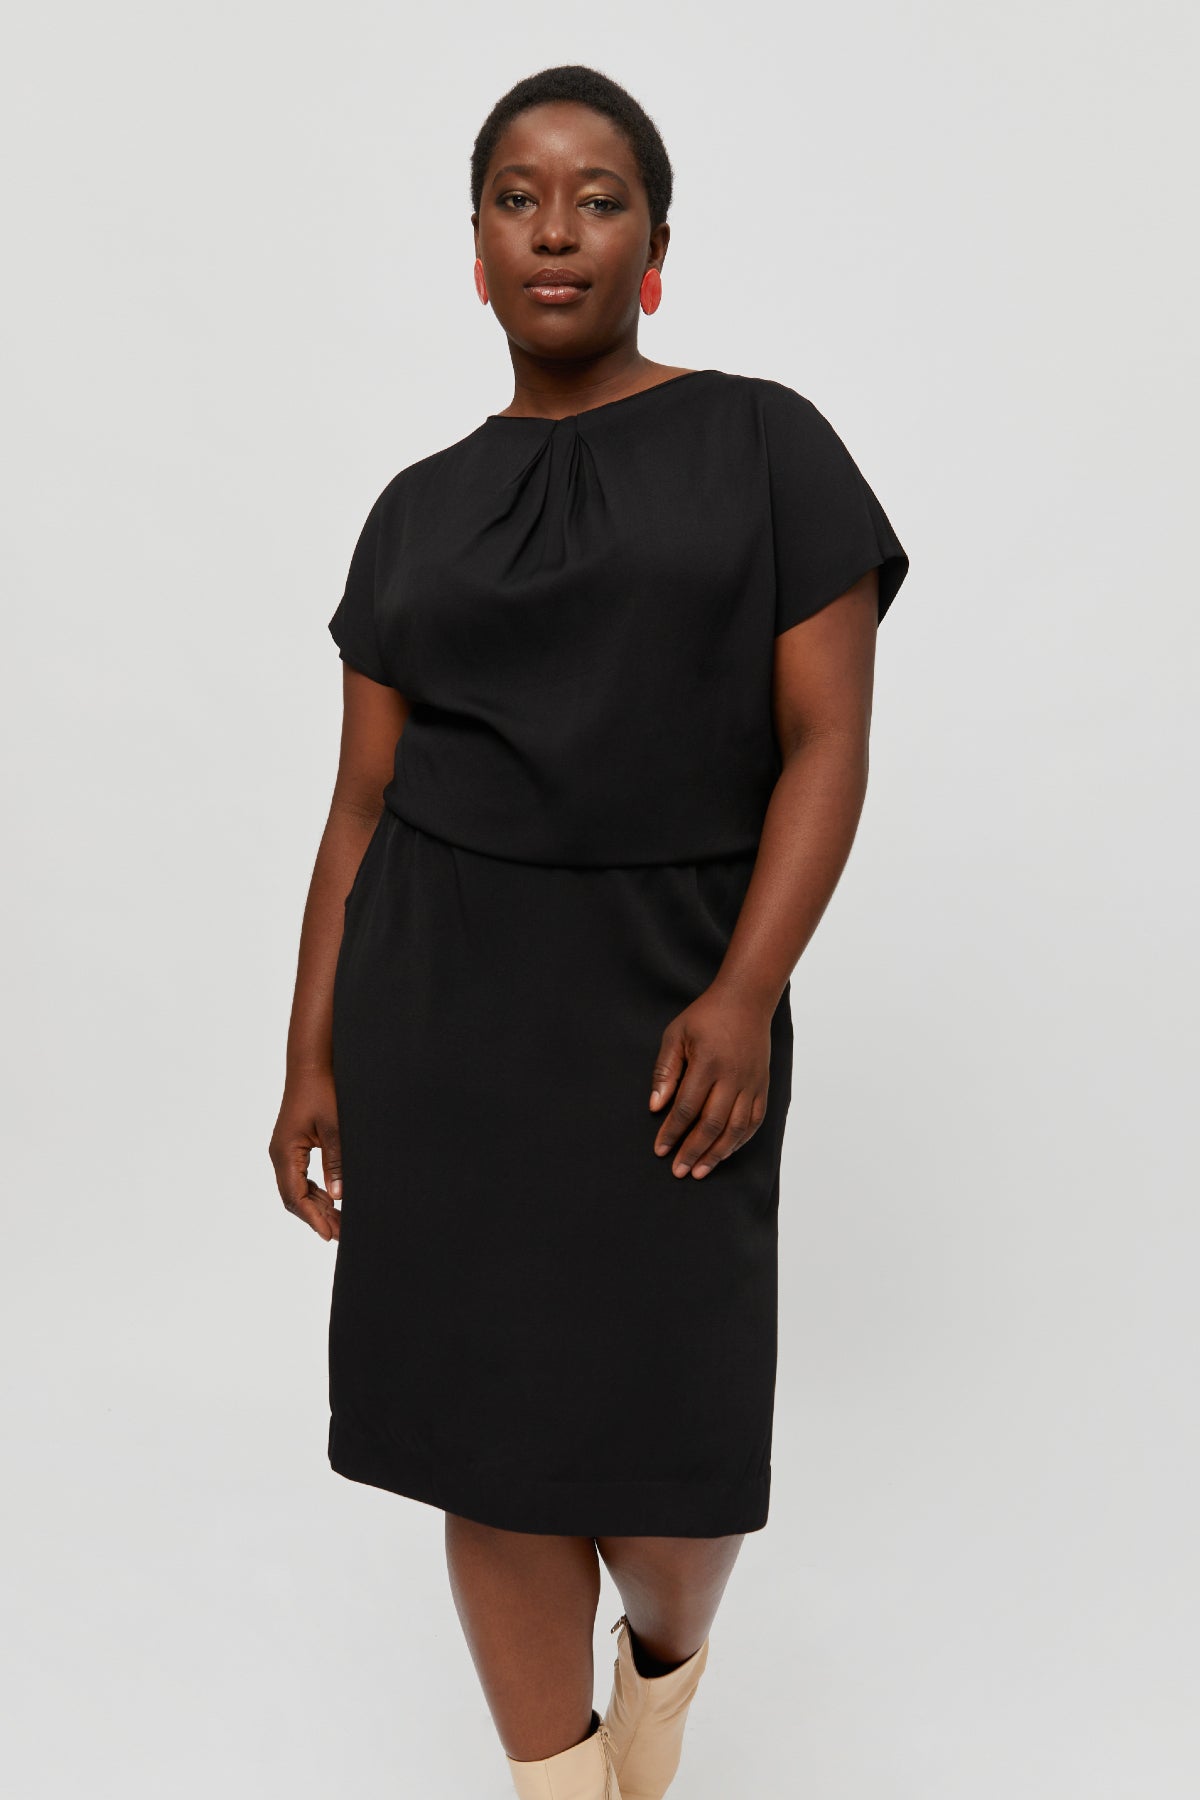 Black Work Dress AMY for Women. Midi Pencil Skirt Dress · Elegant Office Dress with Pockets - AYANI